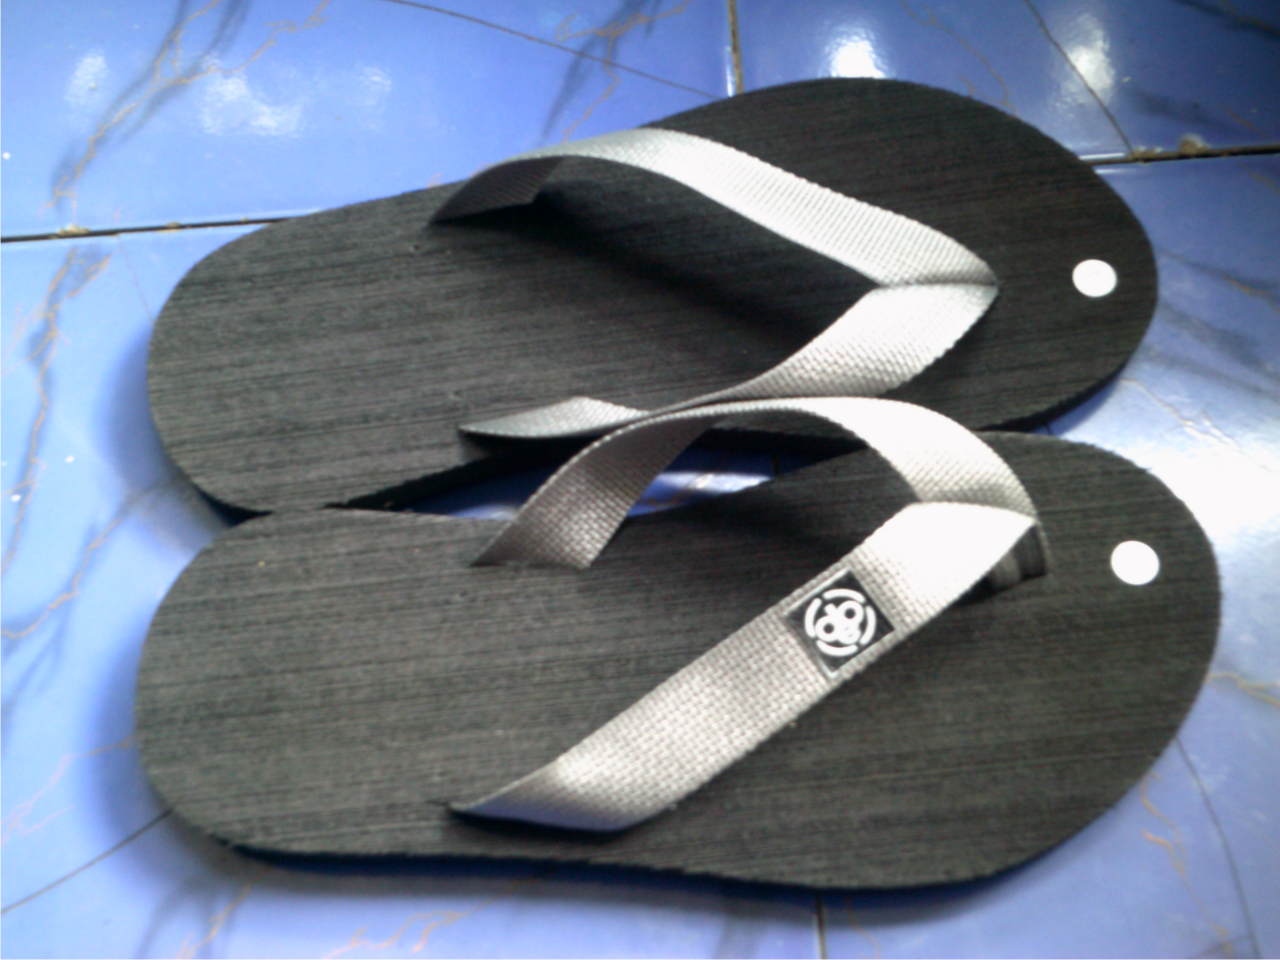  Sandal  Jepit  Logo Tali Harga Grosir Murah  Grosir Sandal  